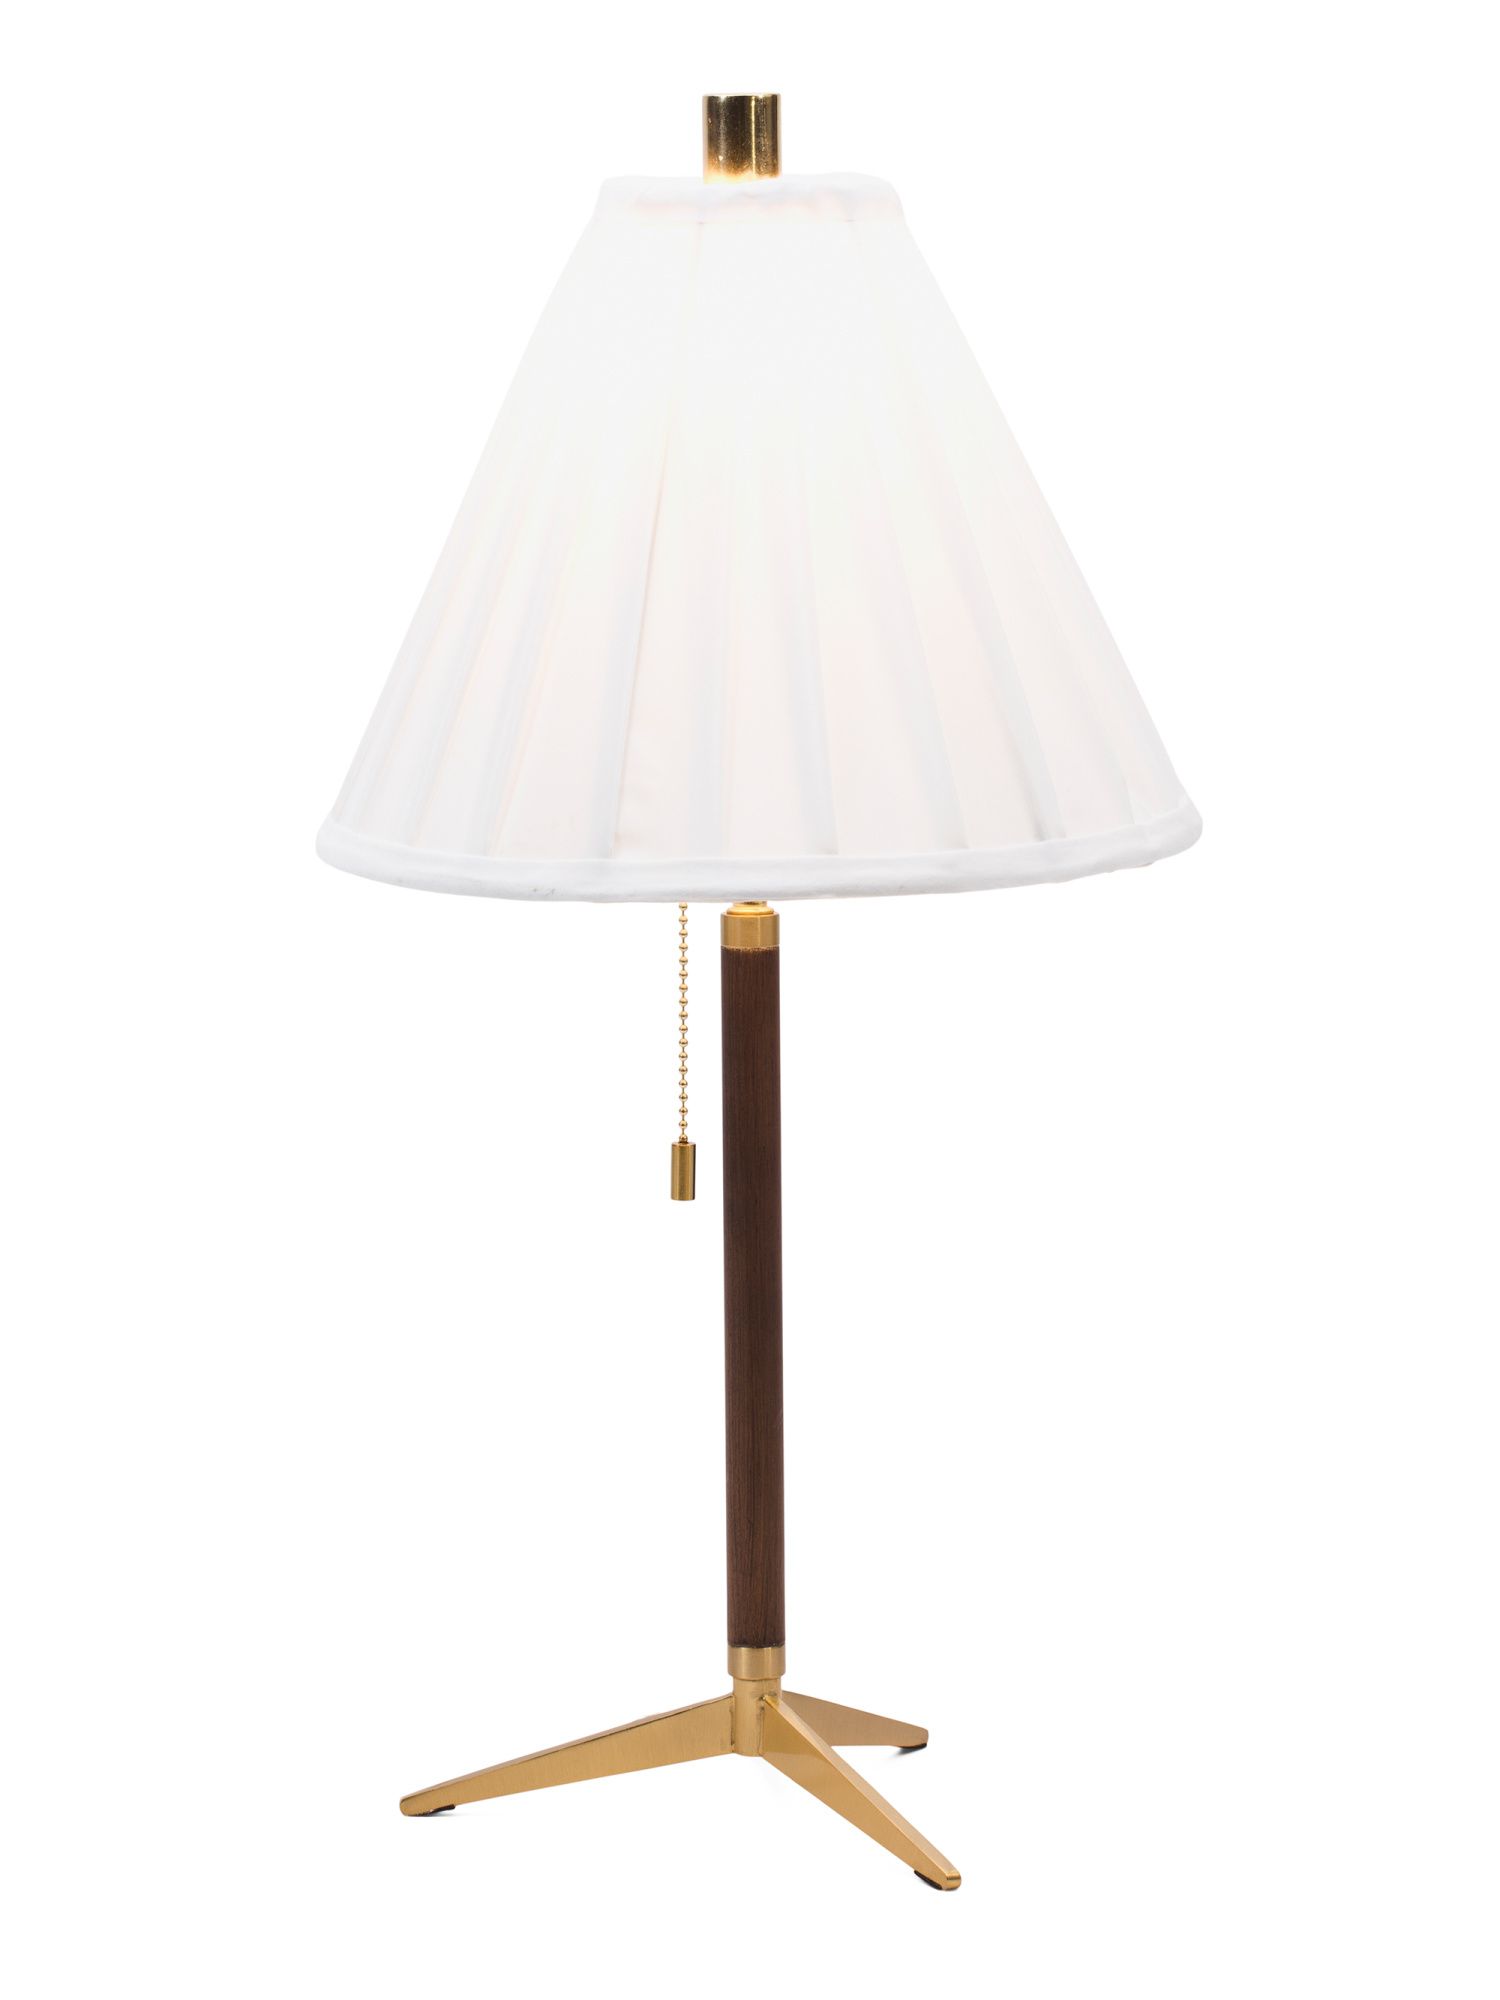 22in Wrapped Lamp | Furniture & Lighting | Marshalls | Marshalls